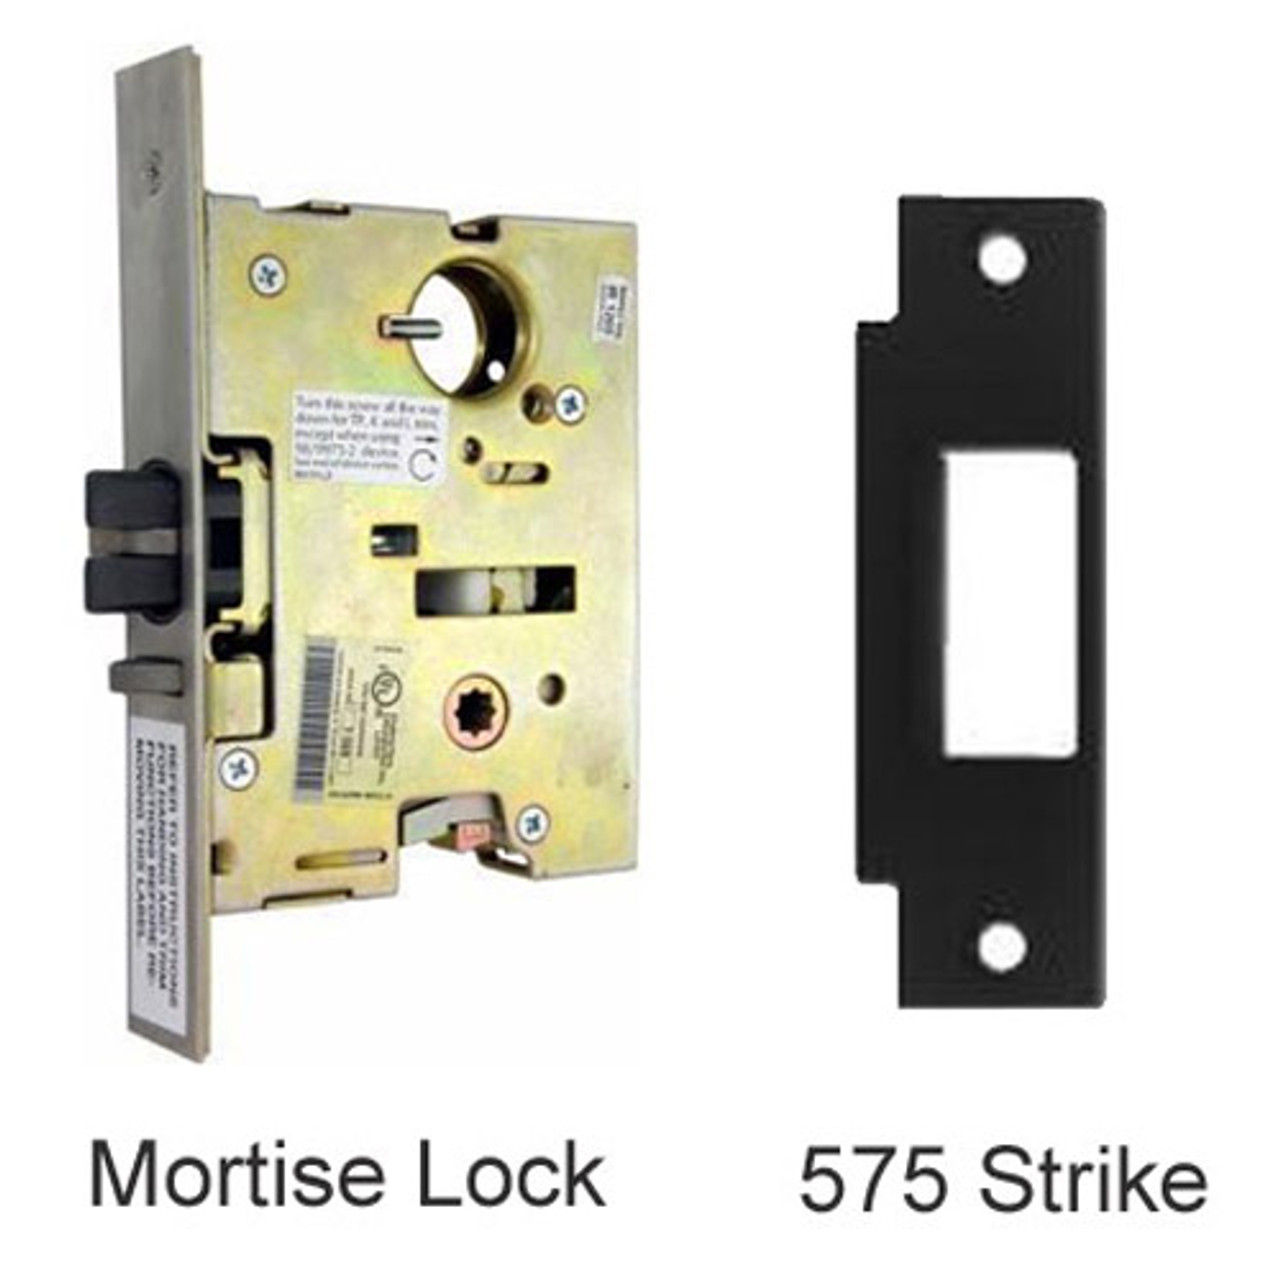 EL9875DT-US15-3 Von Duprin Mortise Lock and Strike